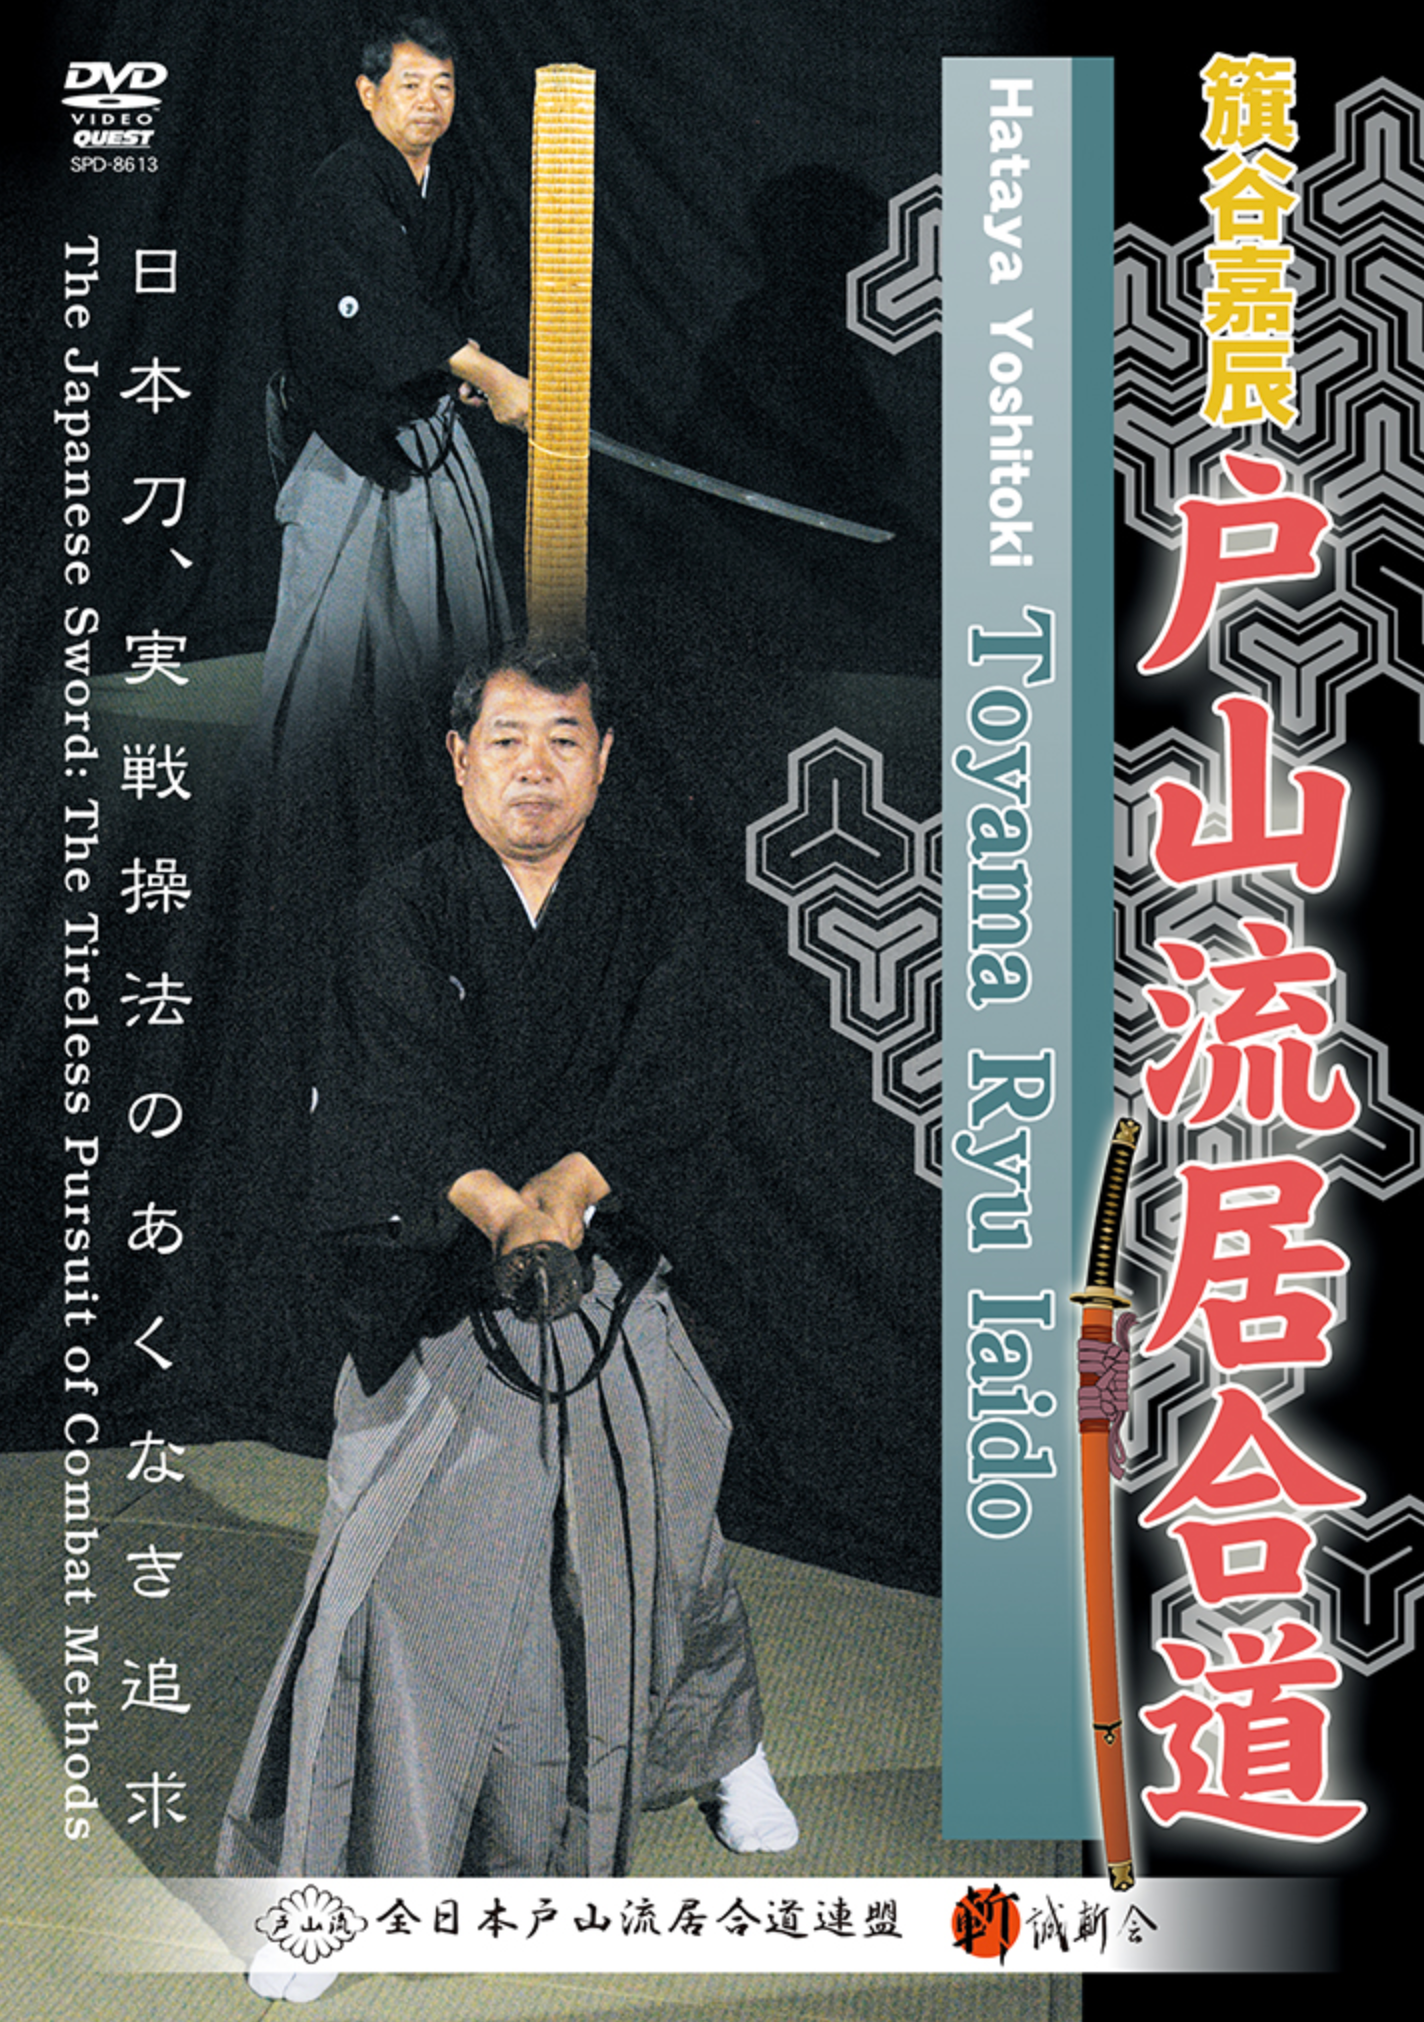 Toyama Ryu Iaido DVD with Yoshitoki Hataya - Budovideos Inc